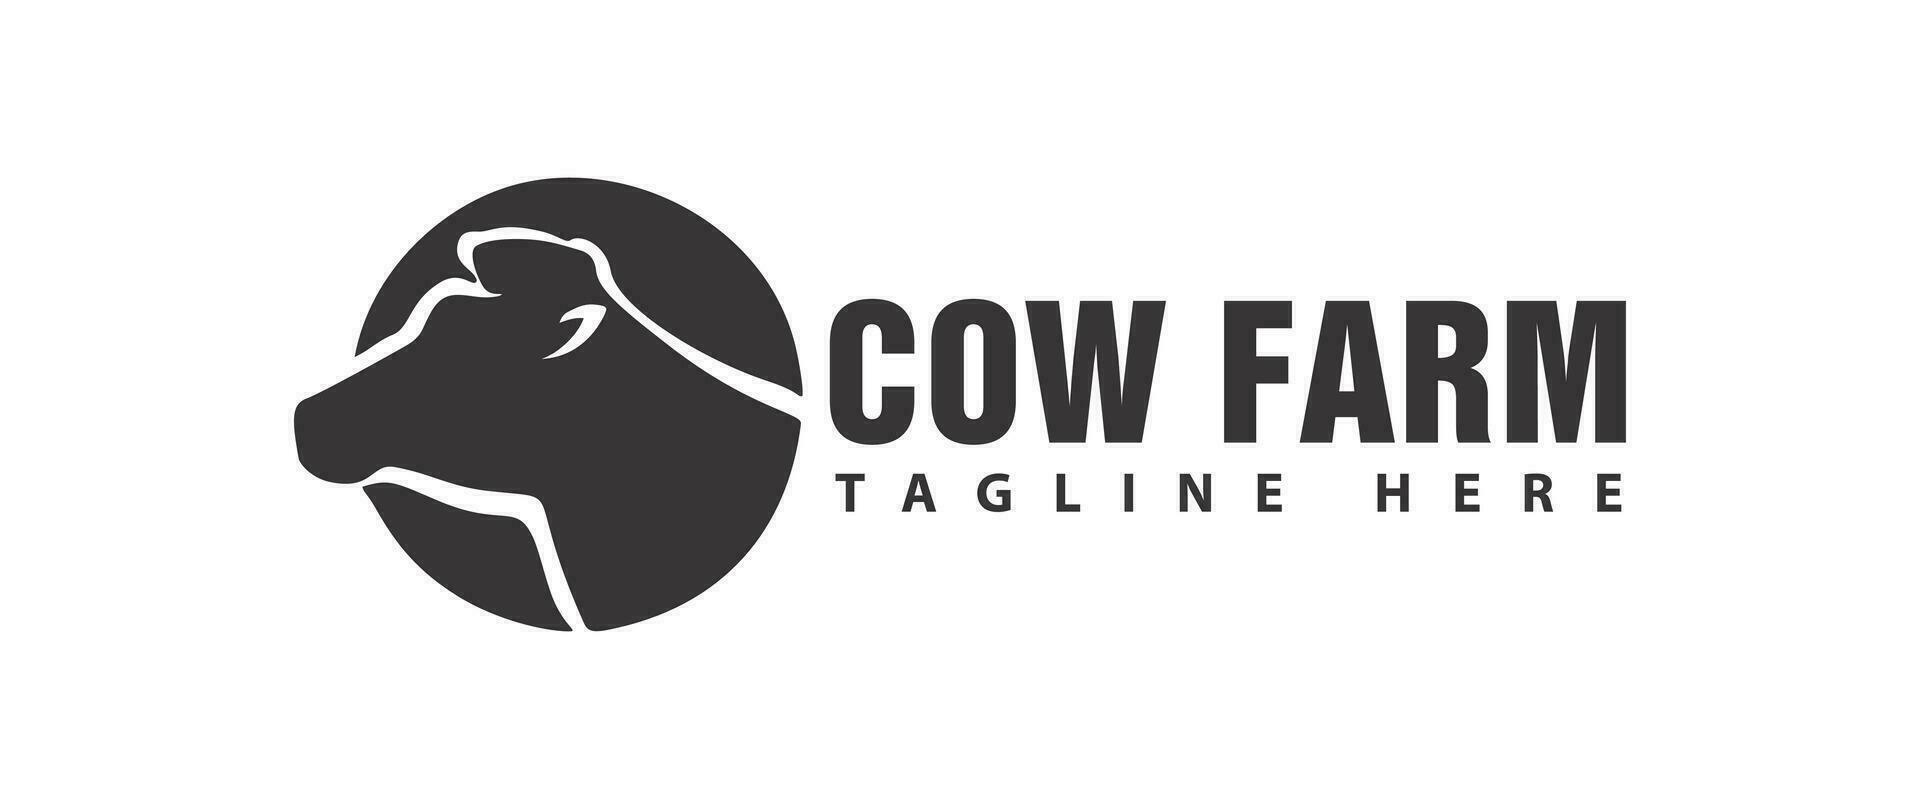 Cow head logo design, Cow head silhouette emblem logo label. vector